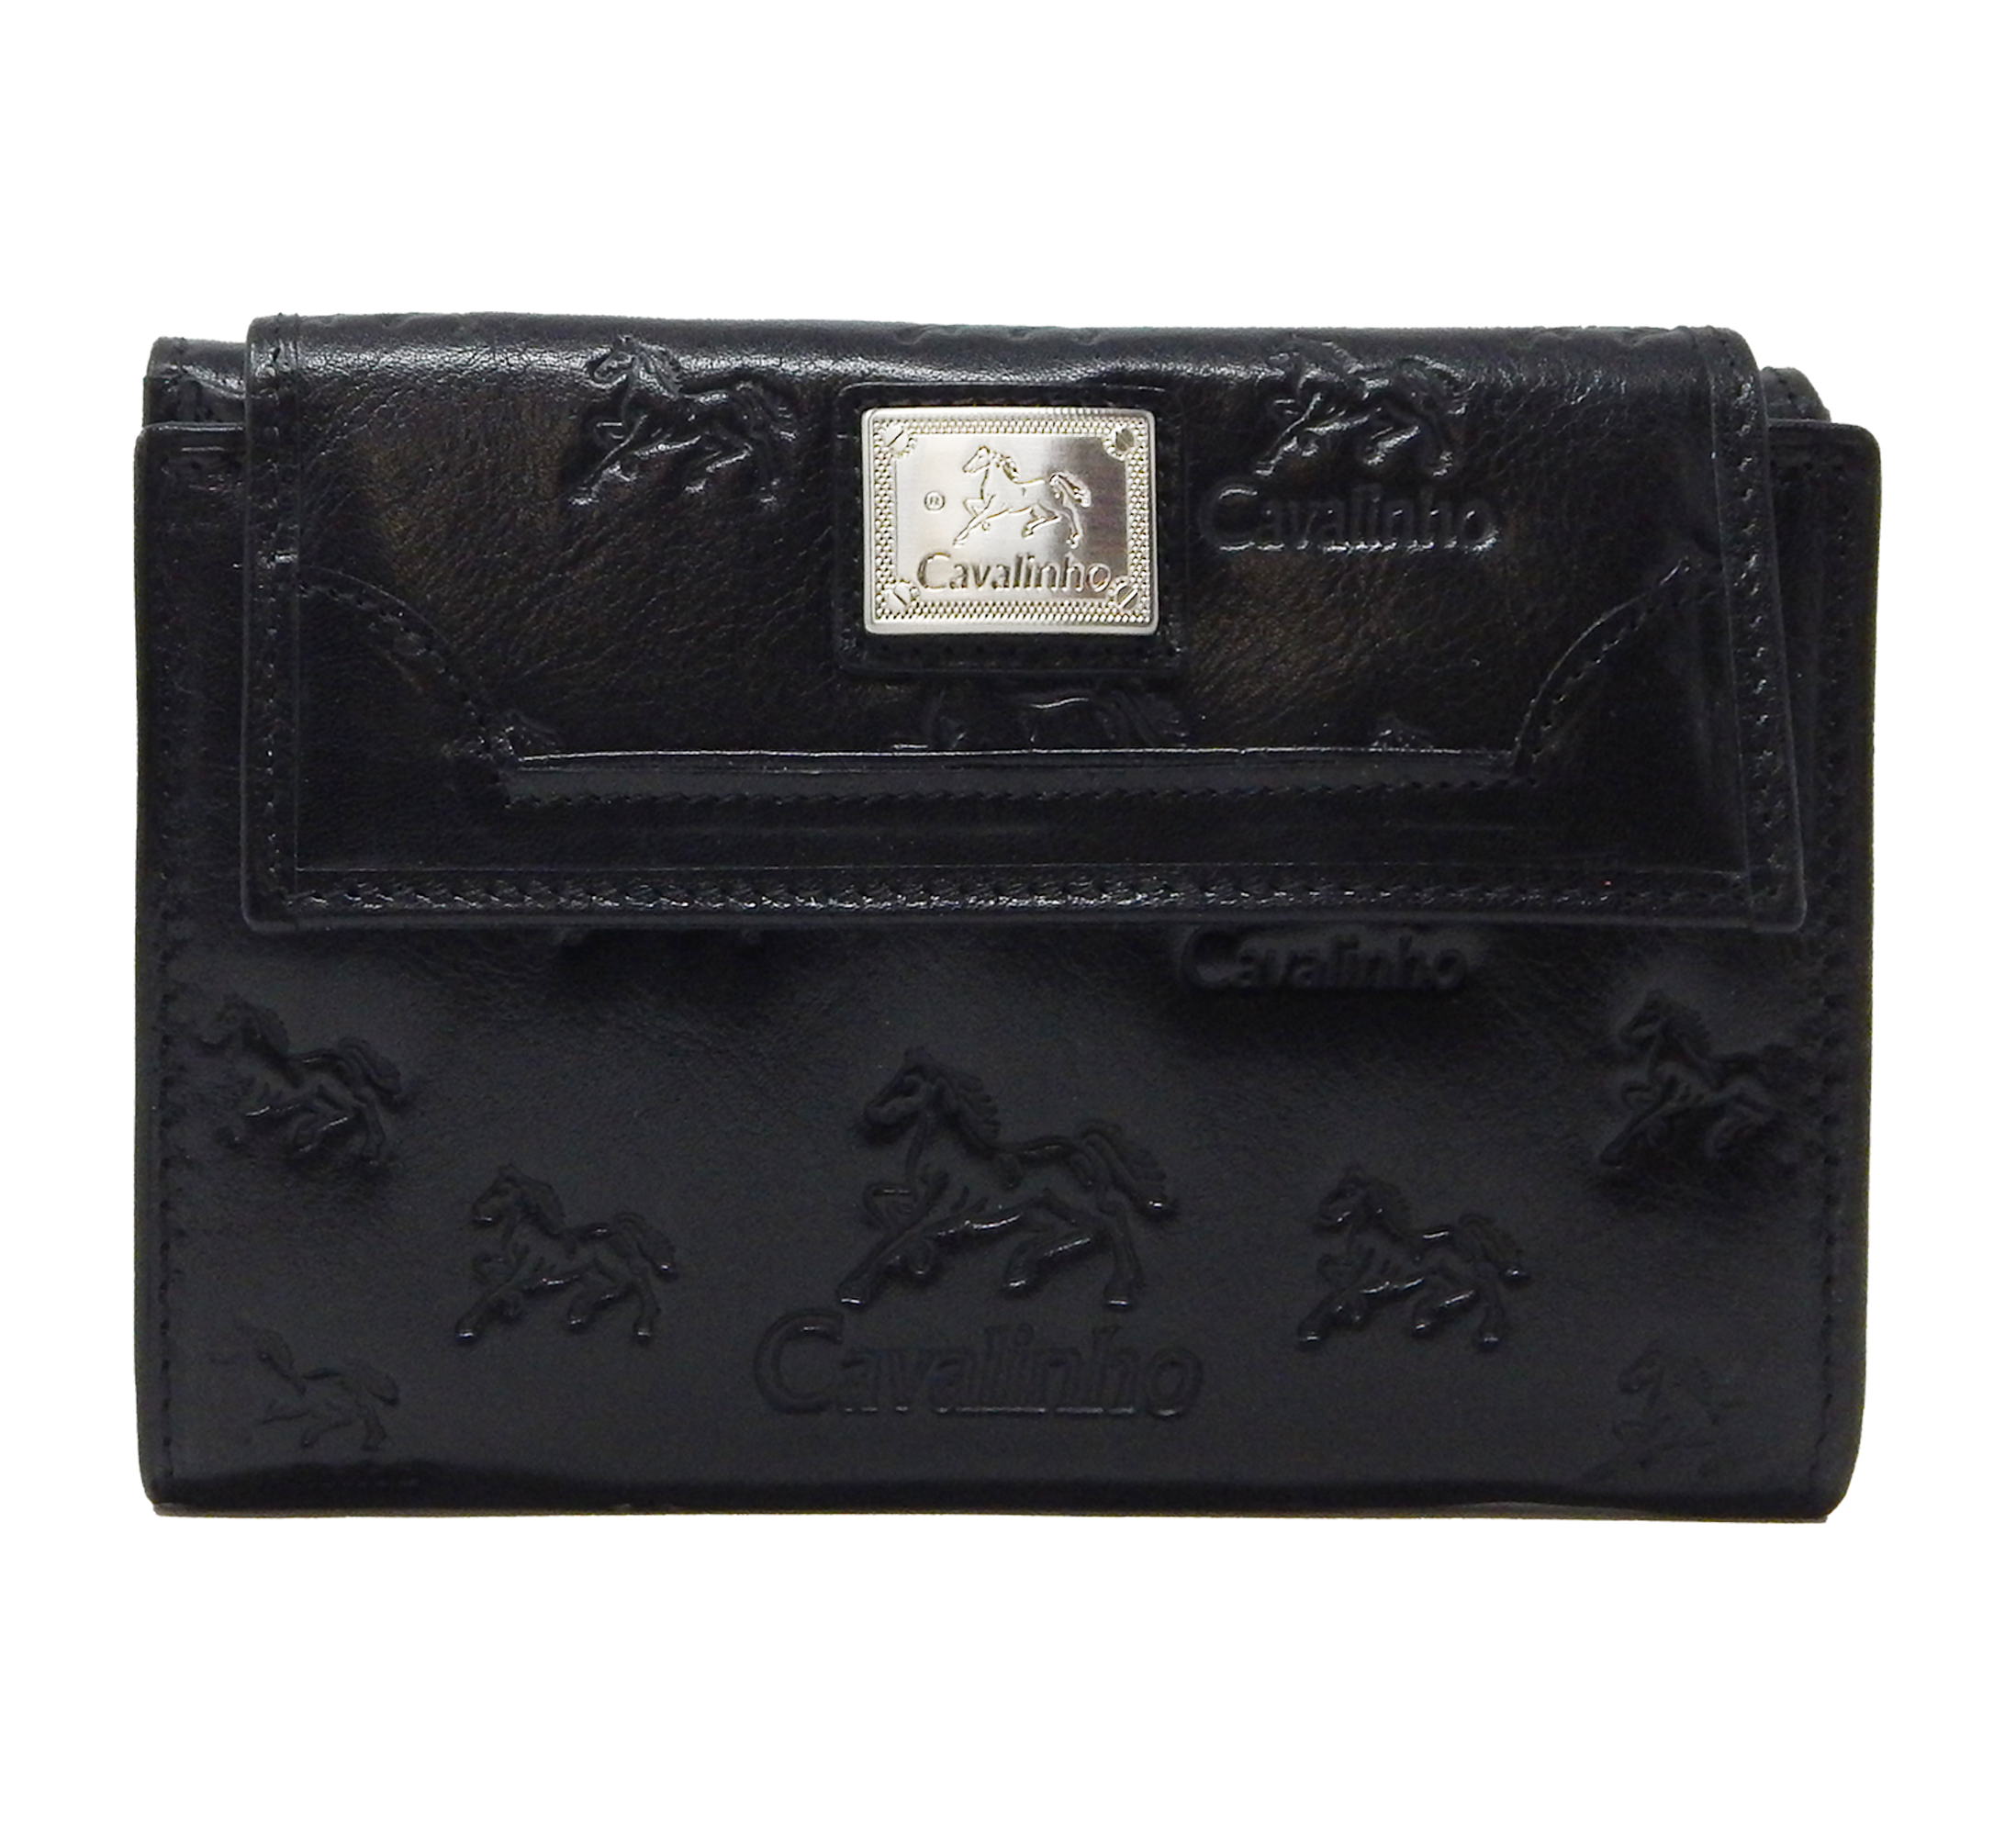 #color_ Black | Cavalinho Cavalo Lusitano Leather Wallet - Black - 28090205.01_1